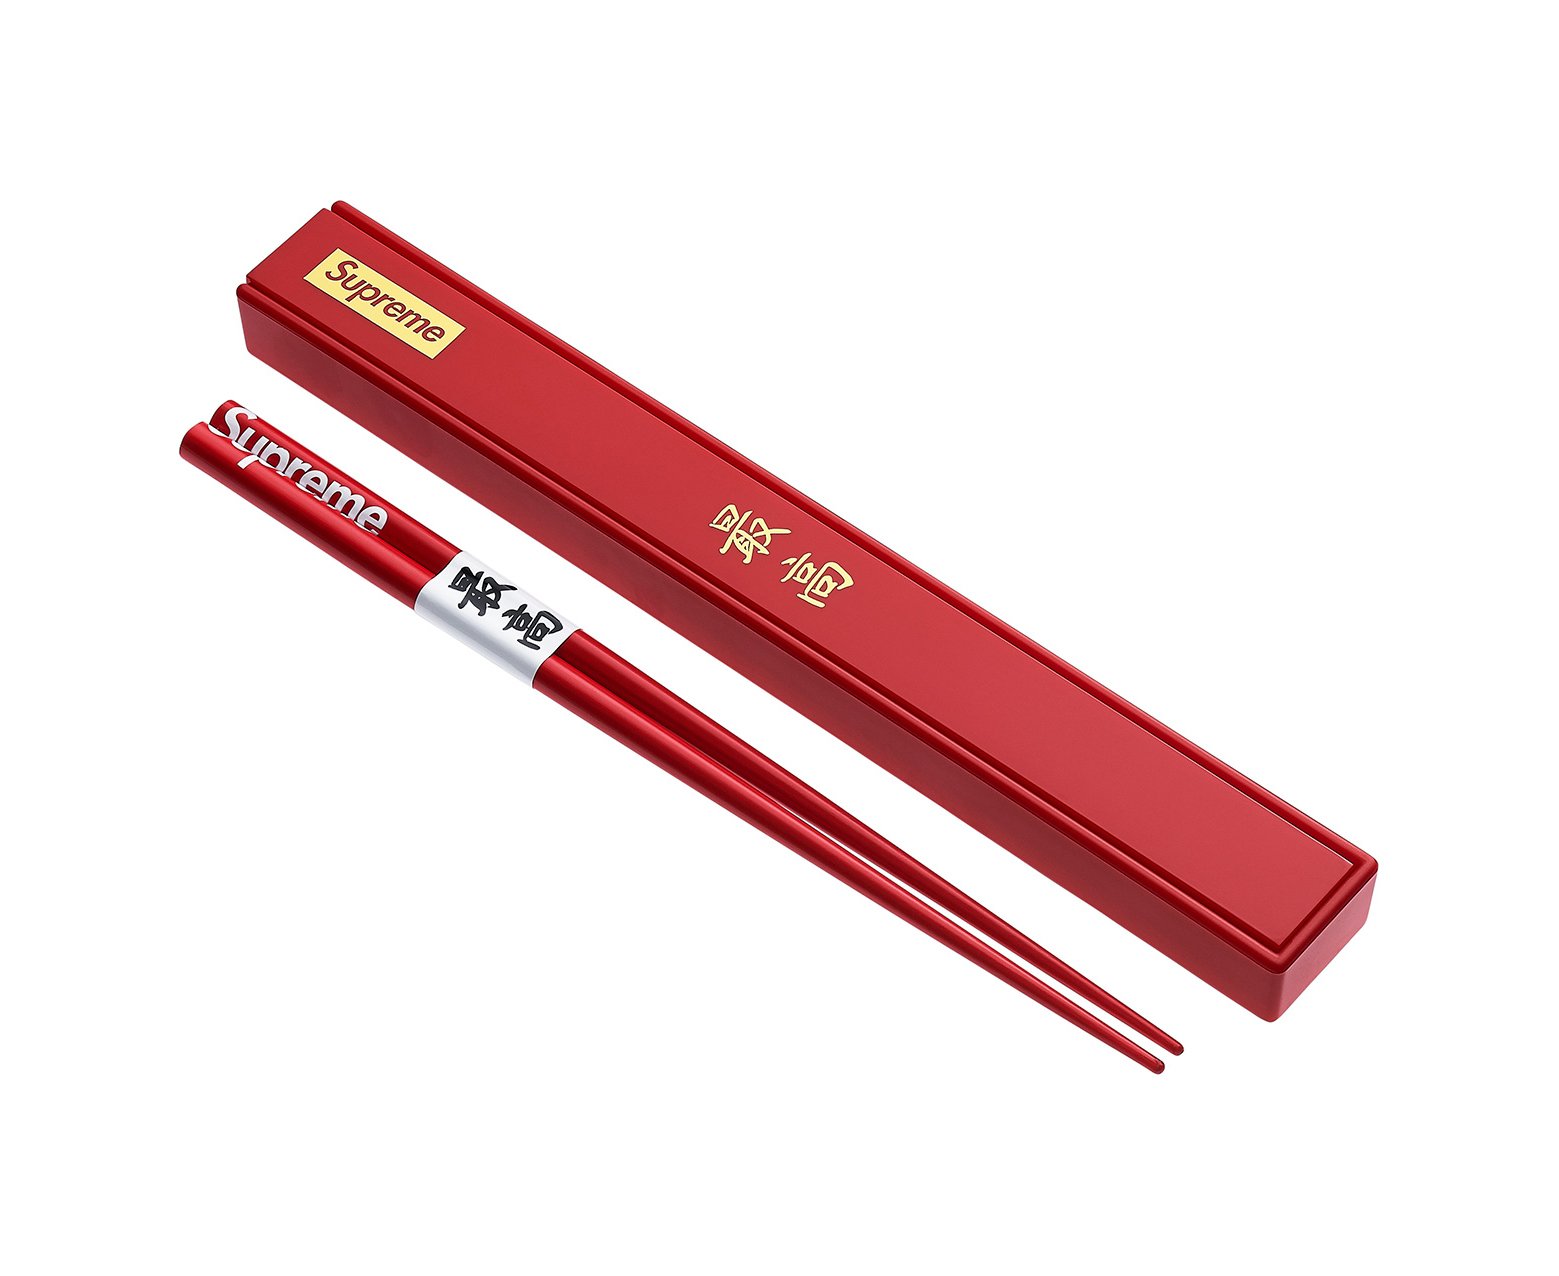 New in original packaging FW17 Supreme Chopsticks red